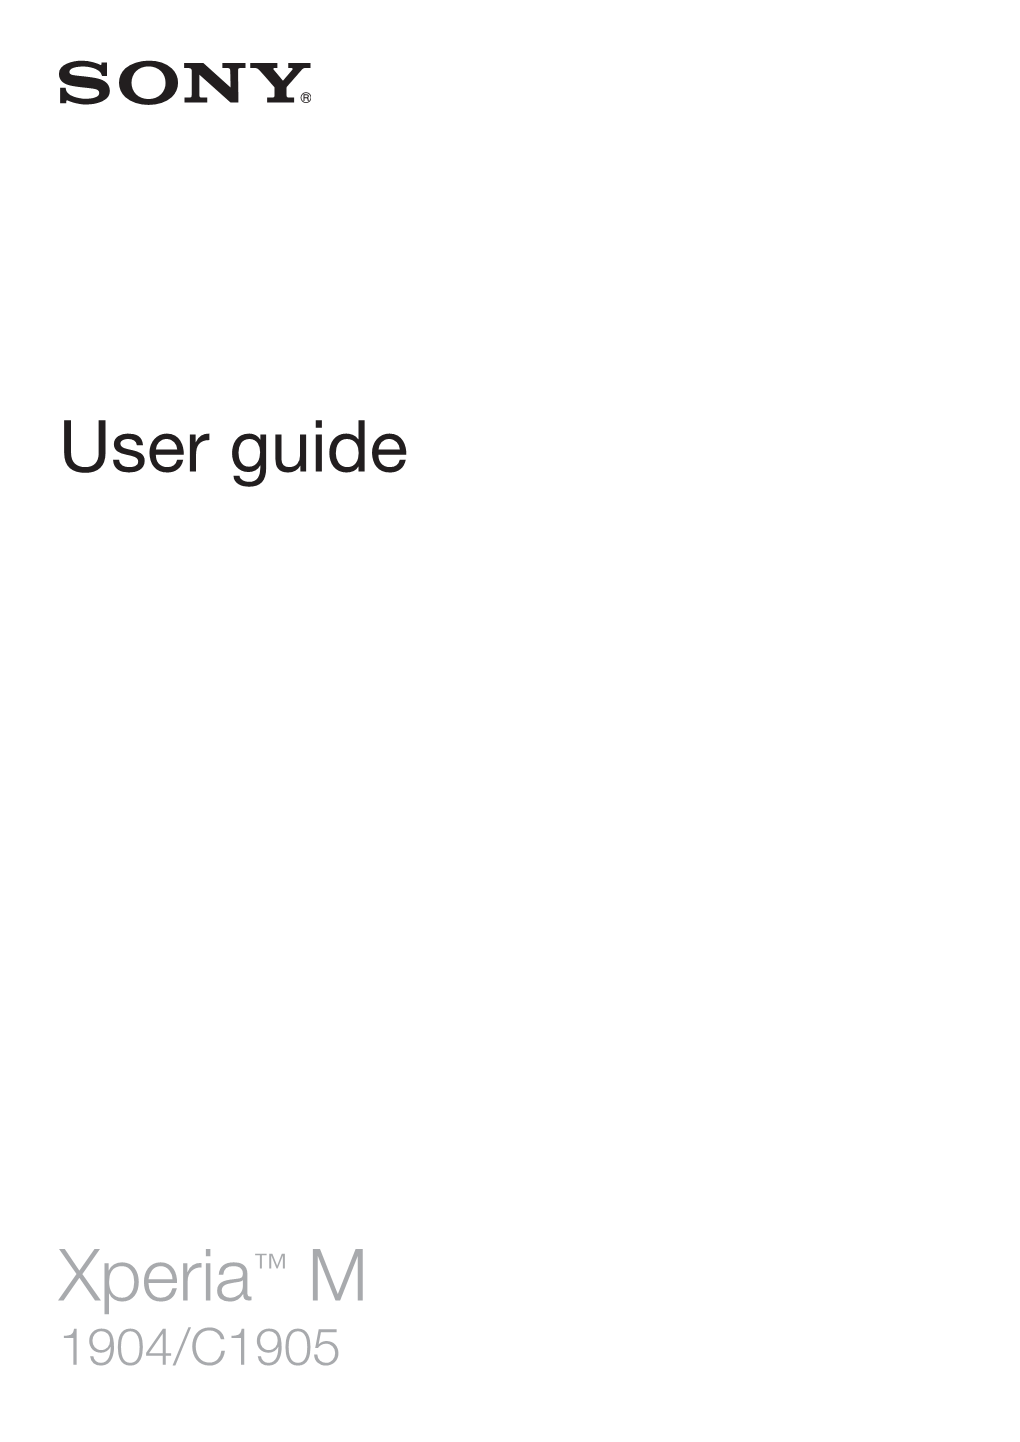 Sony Xperia M User Guide